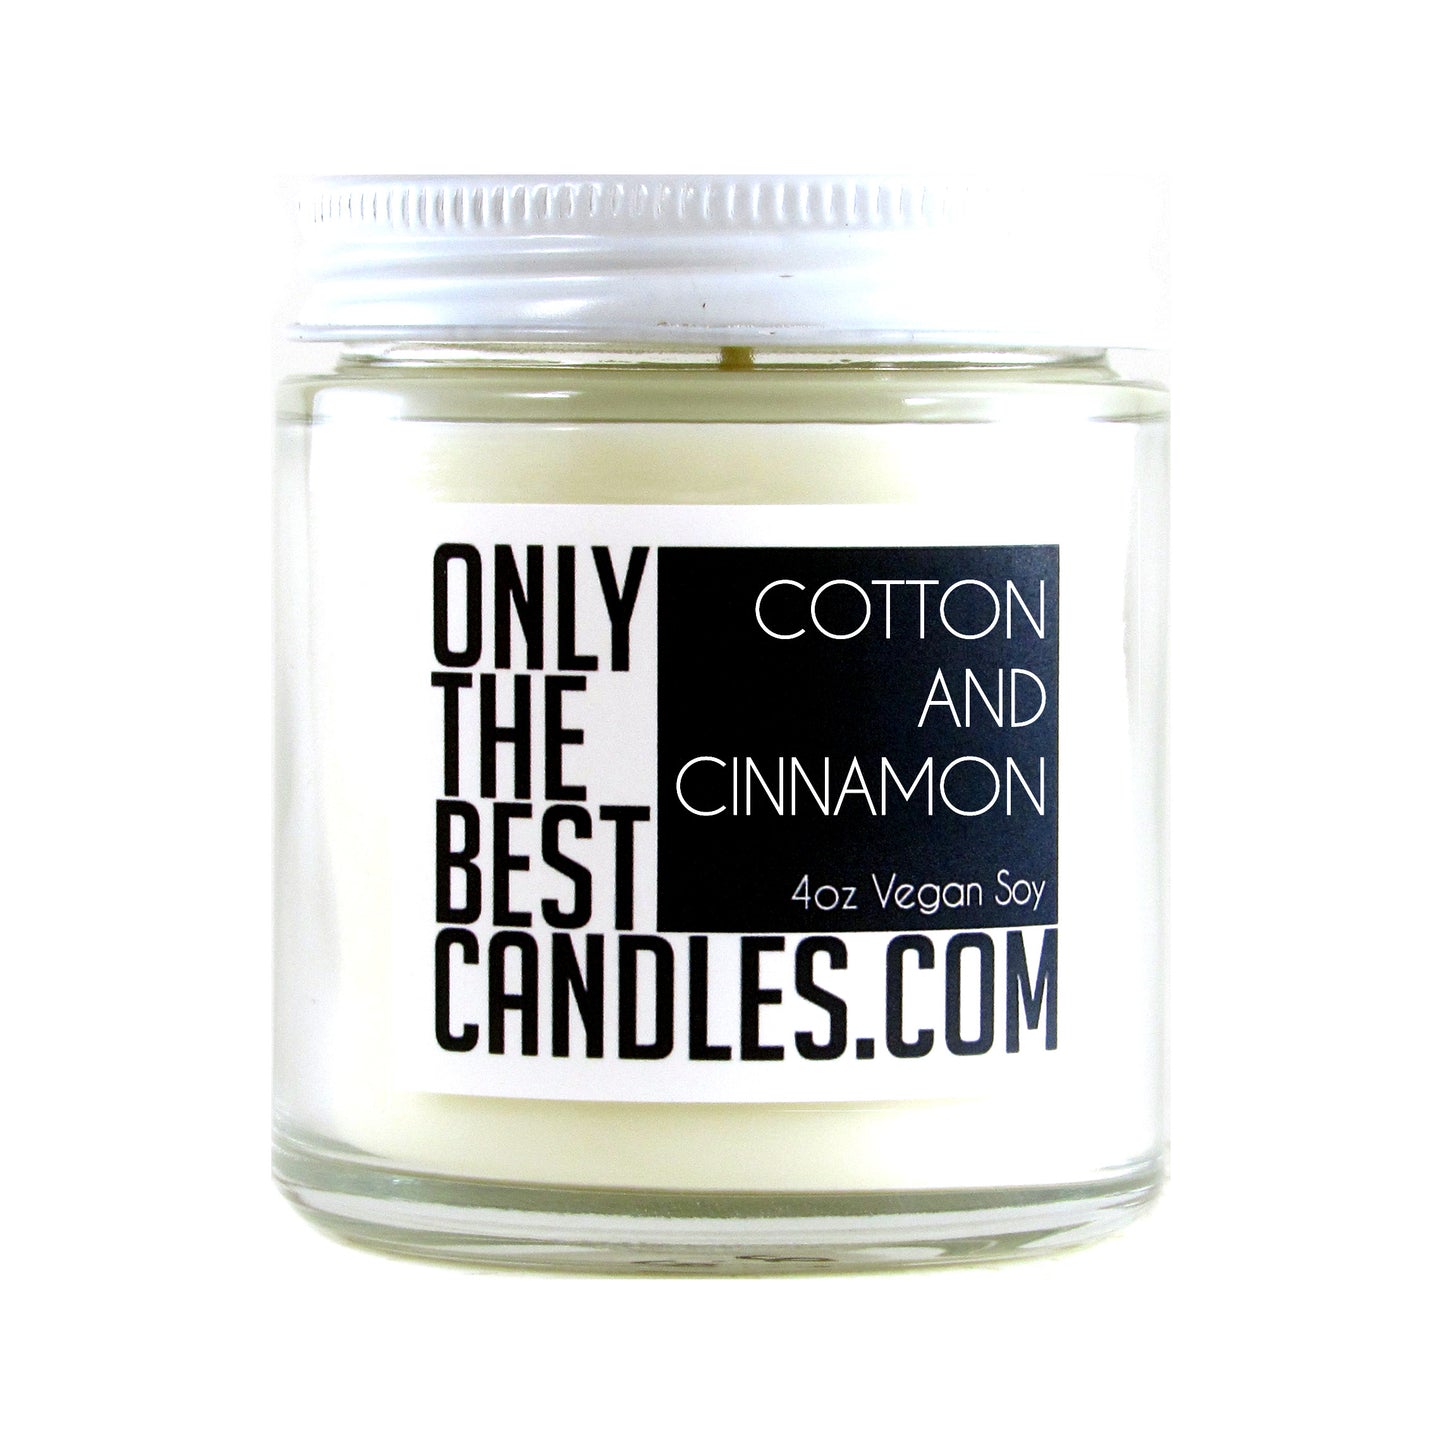 Cotton and Cinnamon 4oz Candle